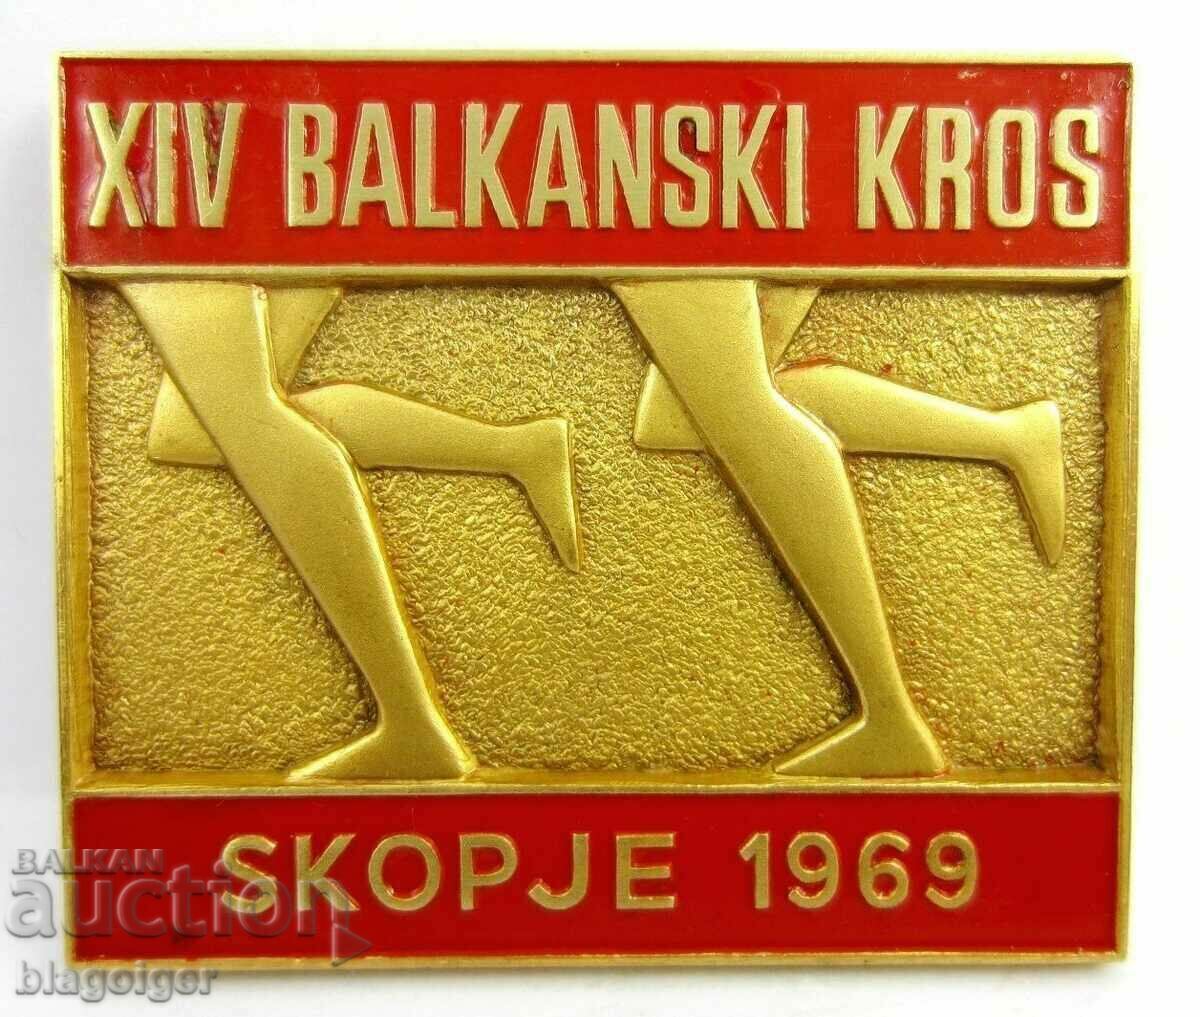 Balkan cross-Balkaniad-Skopje 1969-Official sign-Berton